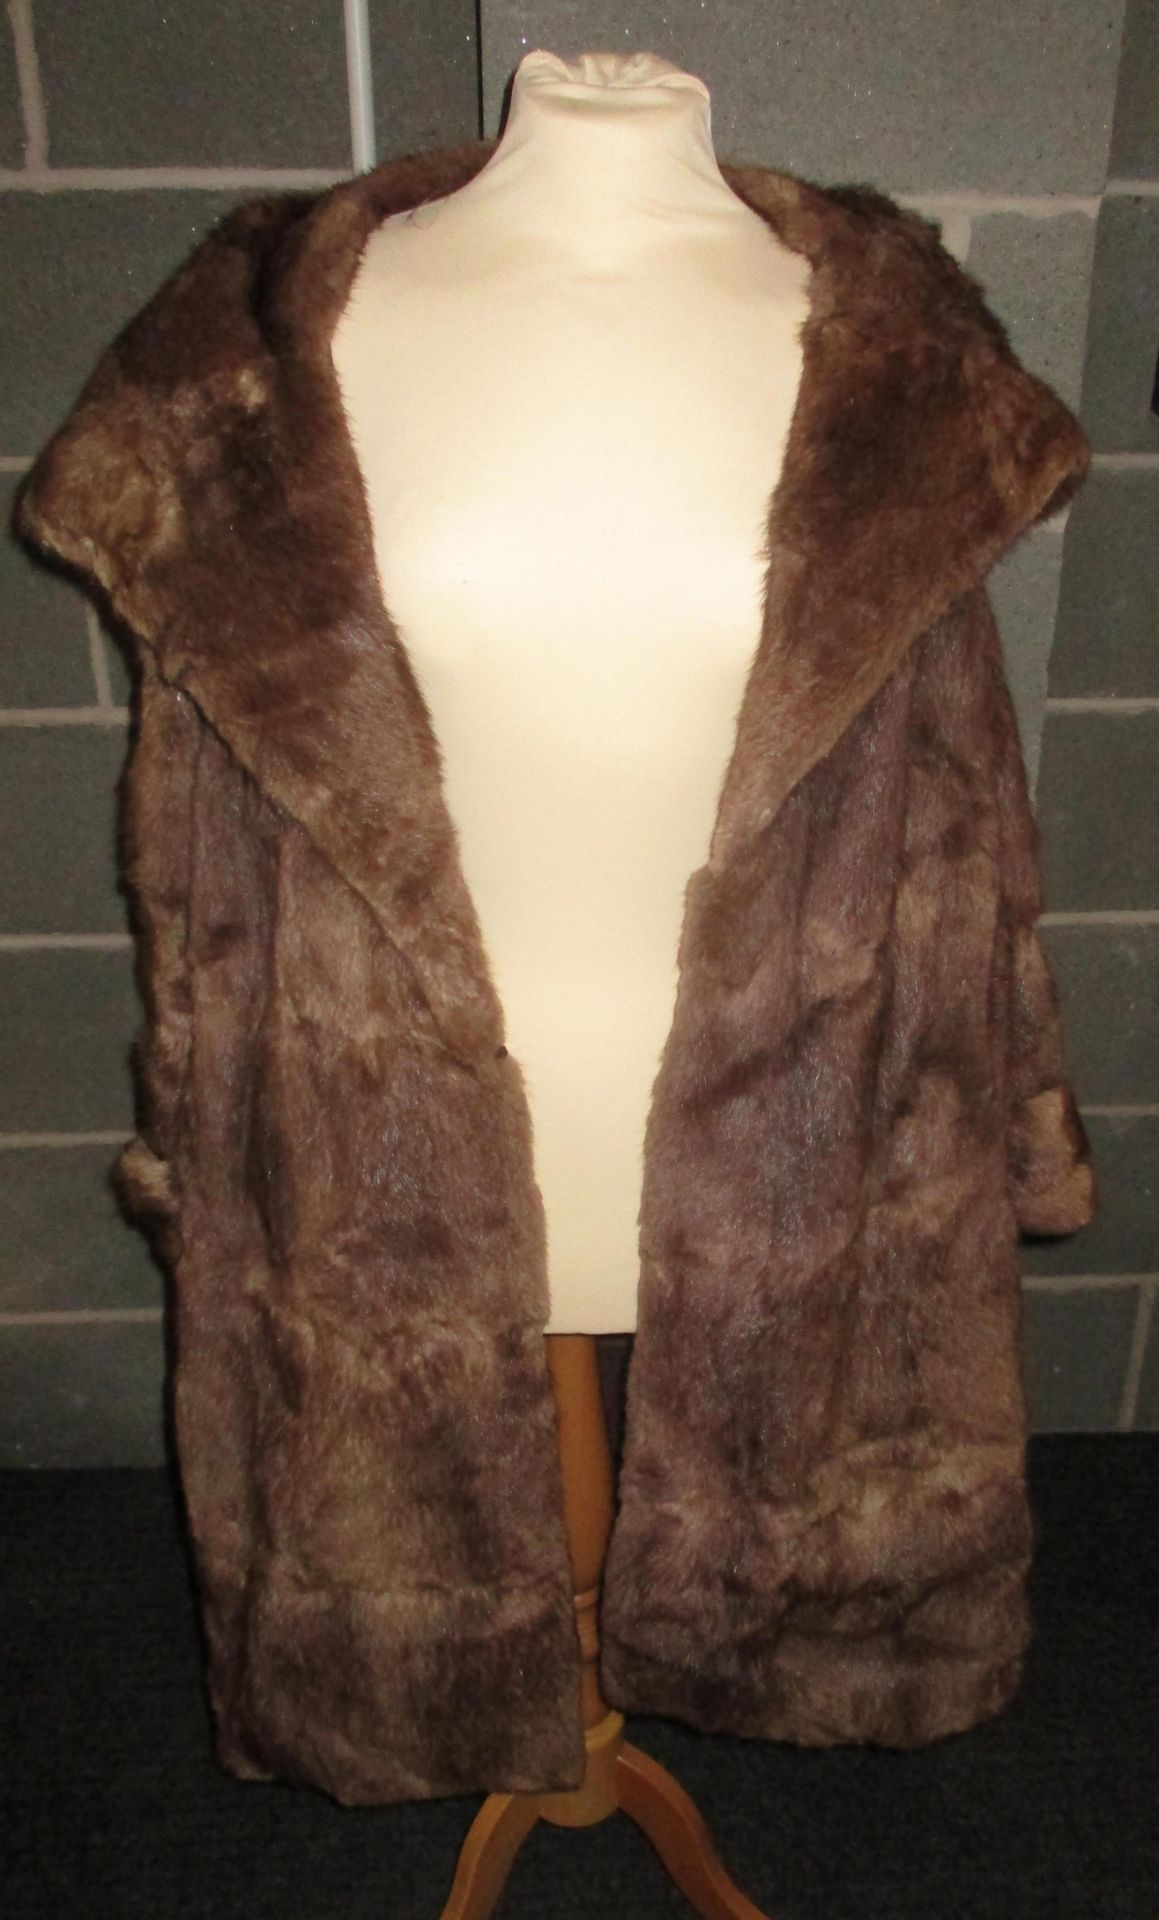 Ladies long brown fur coat - no size or make shown